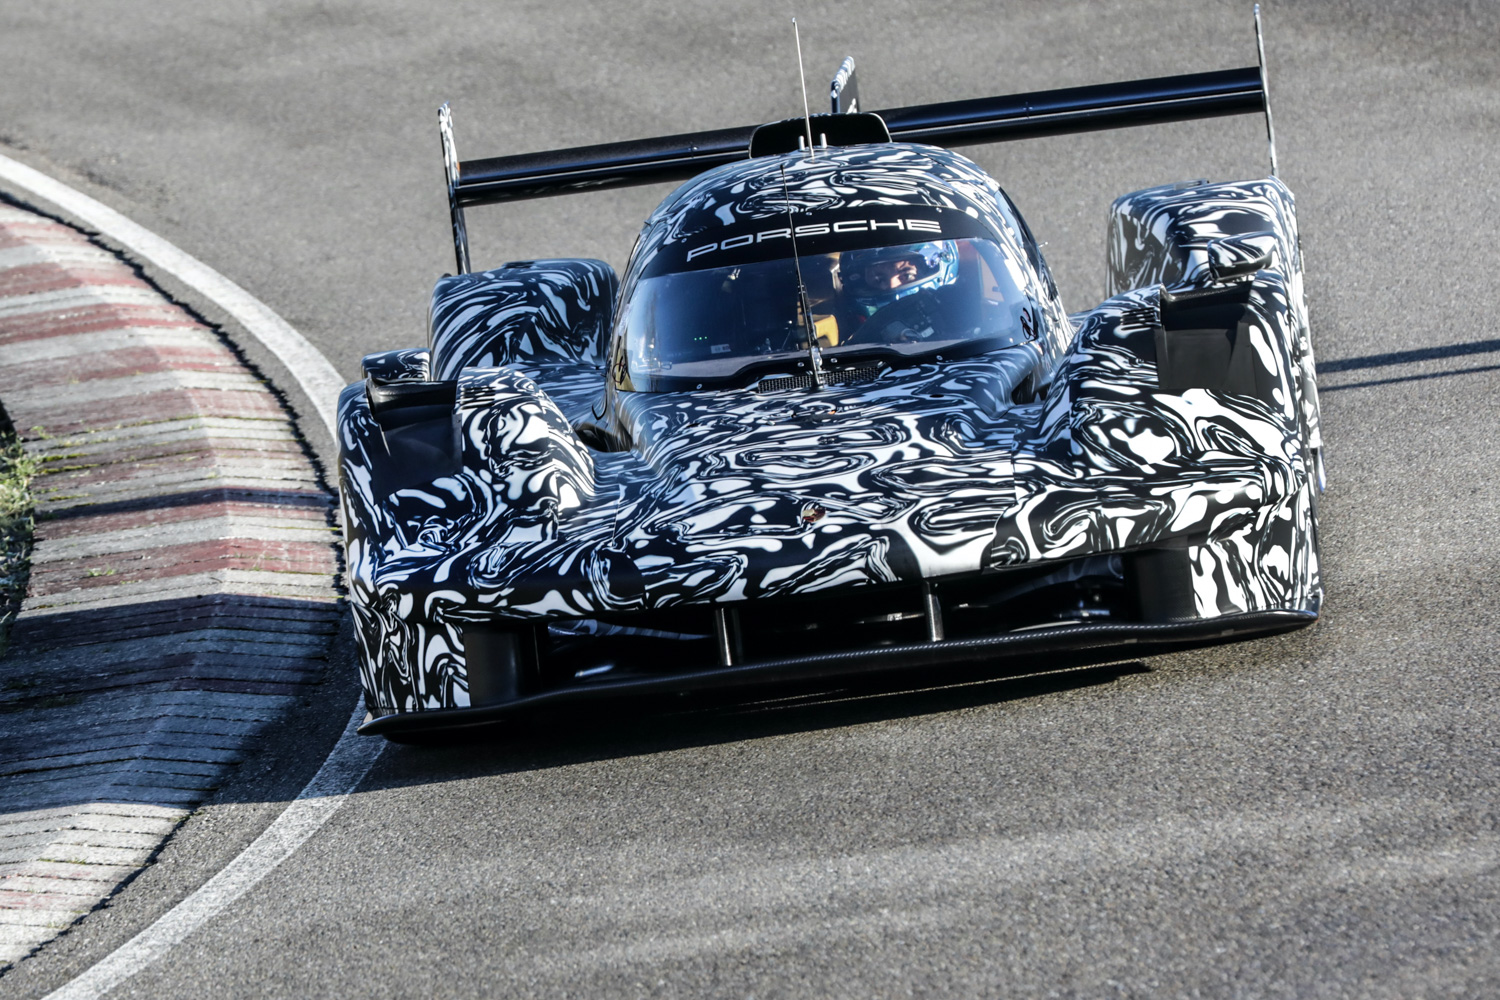 Car News | Porsche LMDh endurance racer begins testing | CompleteCar.ie